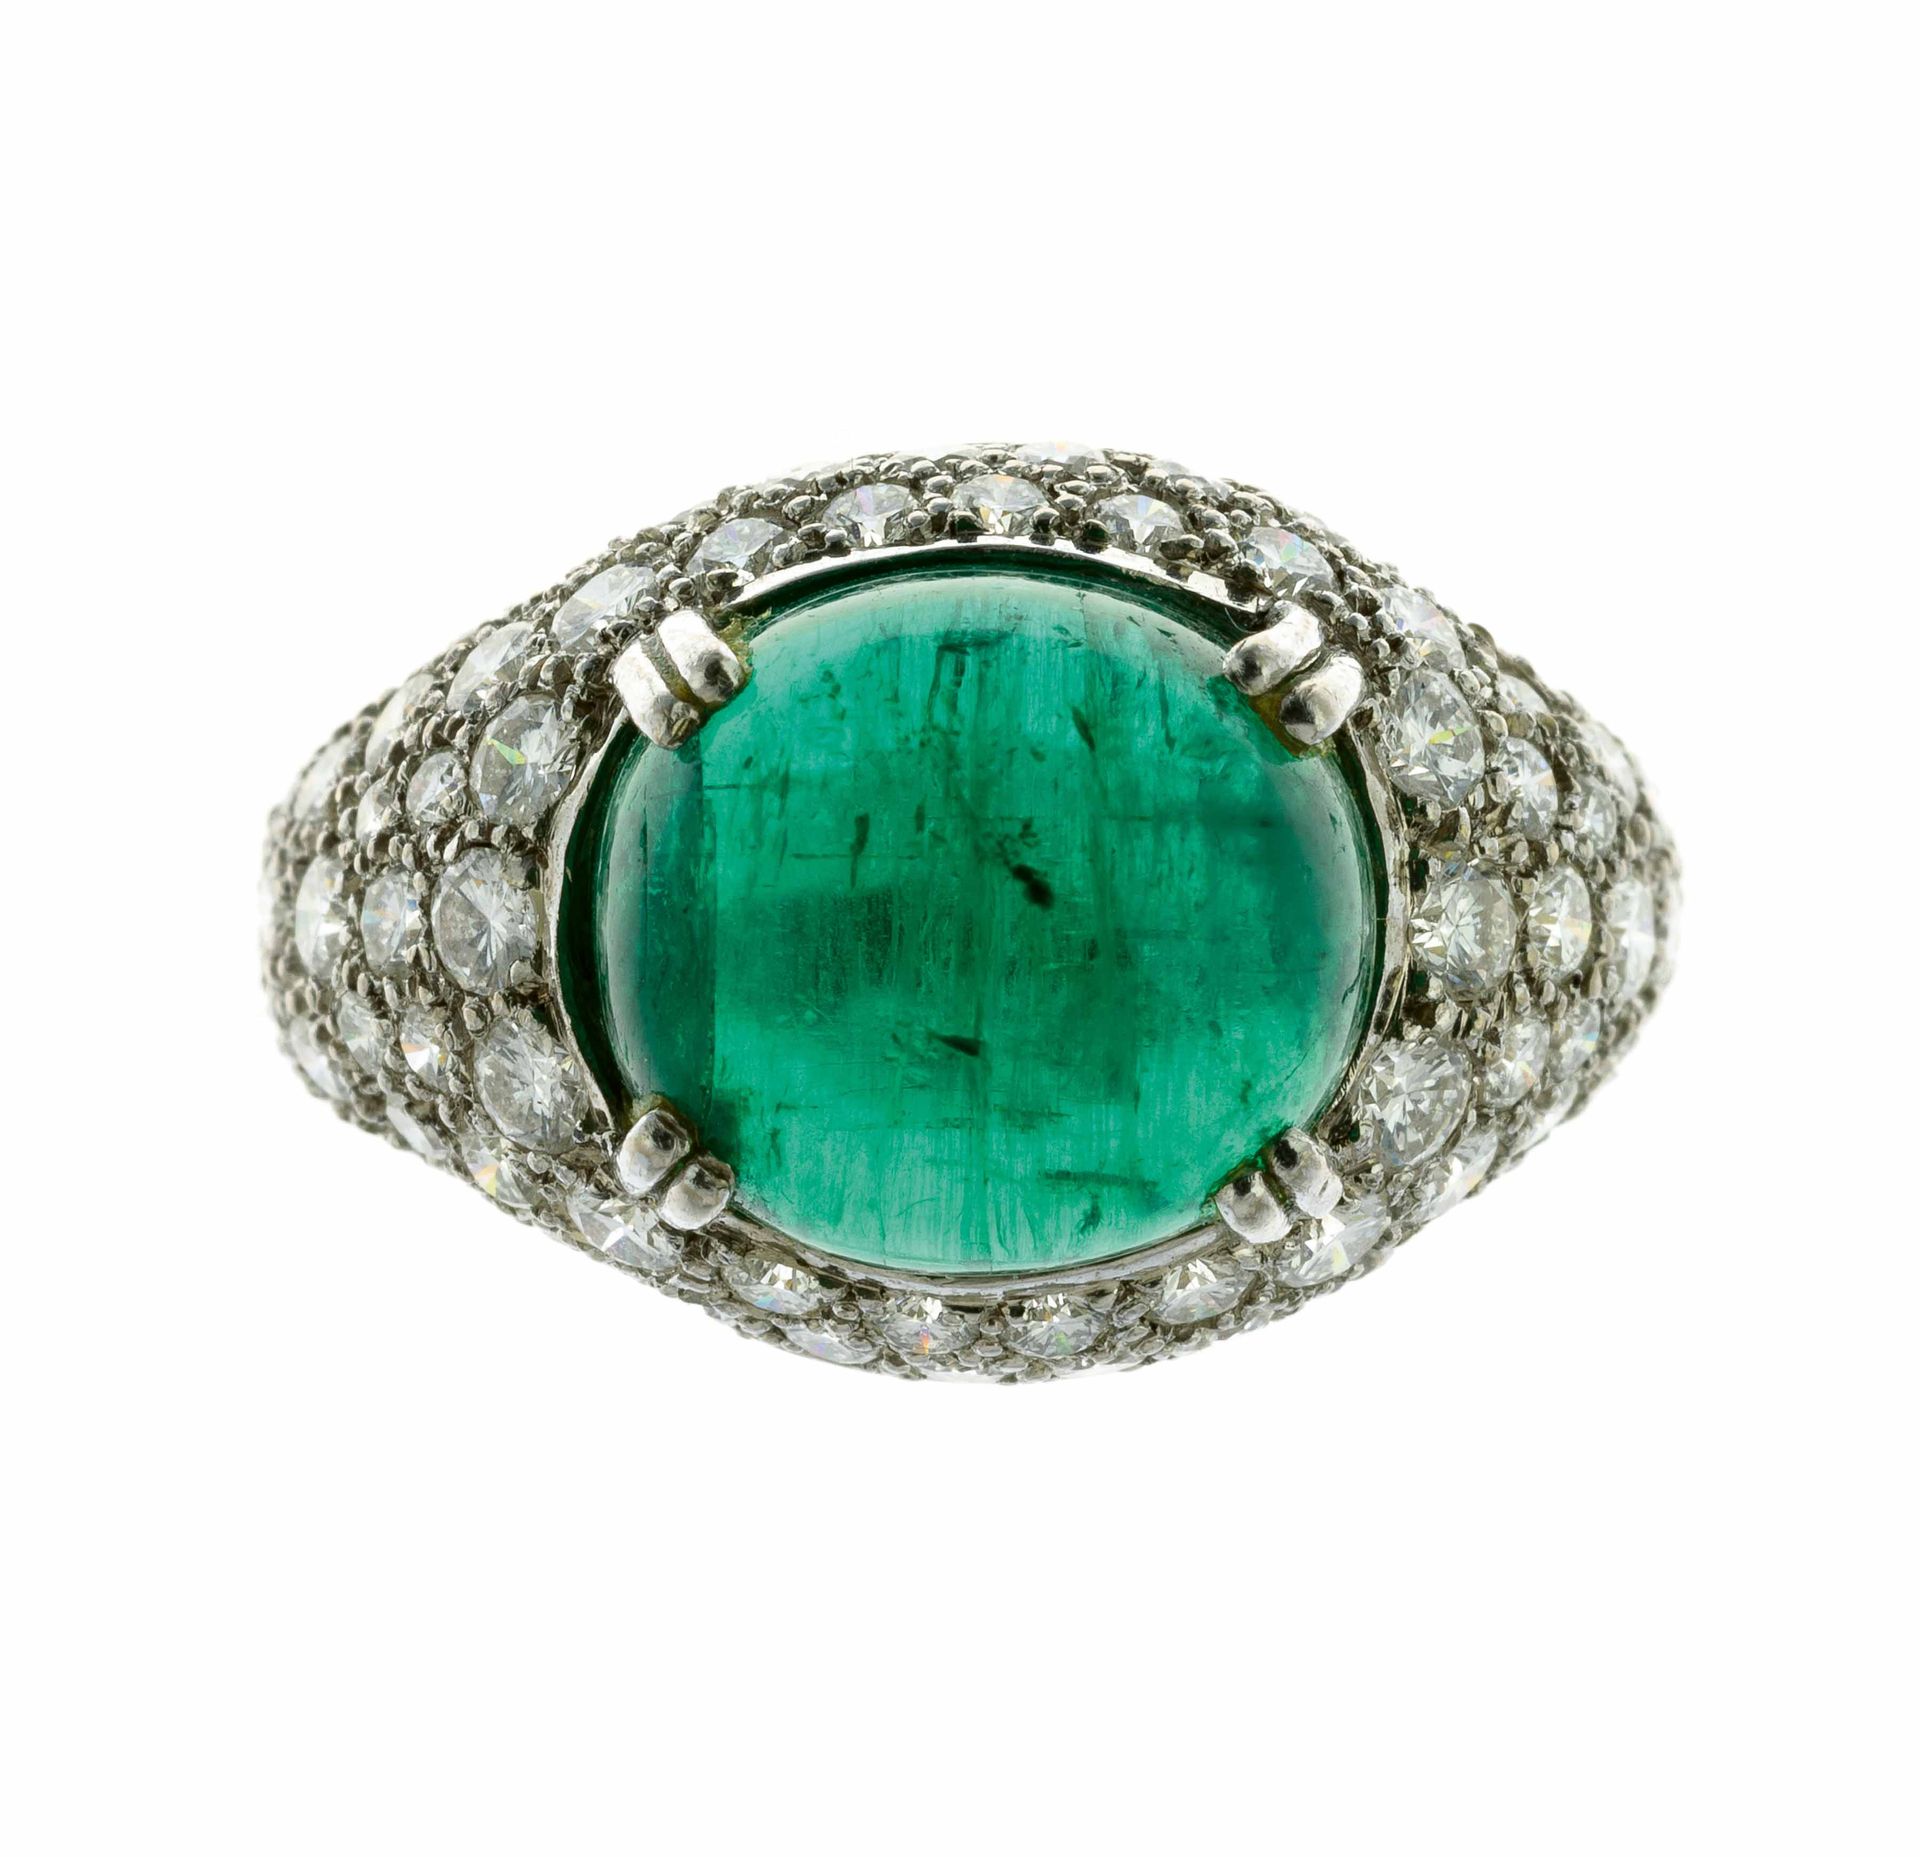 Null 凸圆形祖母绿为中心的白金戒指，重约5克拉，镶嵌在雪白的钻石上 - 毛重：6克